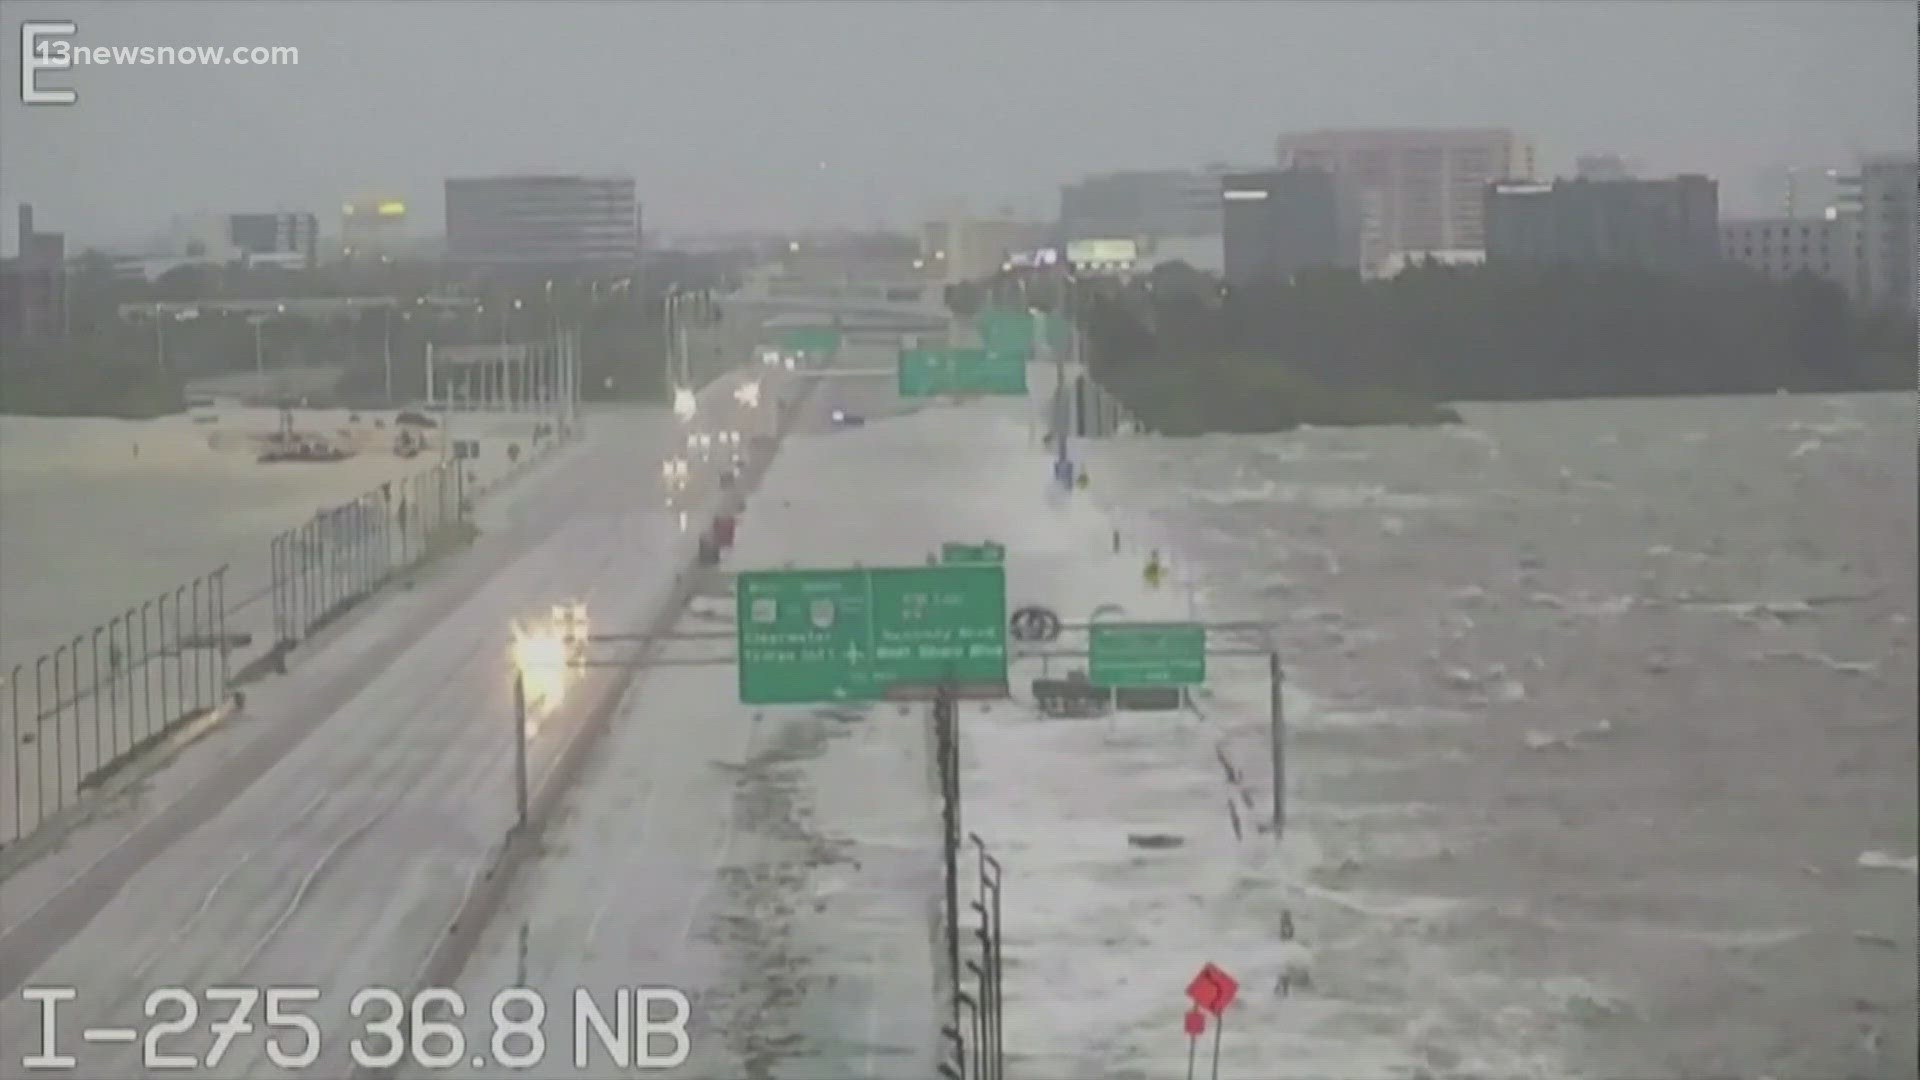 Deadly Tropical Storm Idalia floods parts of South Carolina, including  Charleston, after pummeling Florida